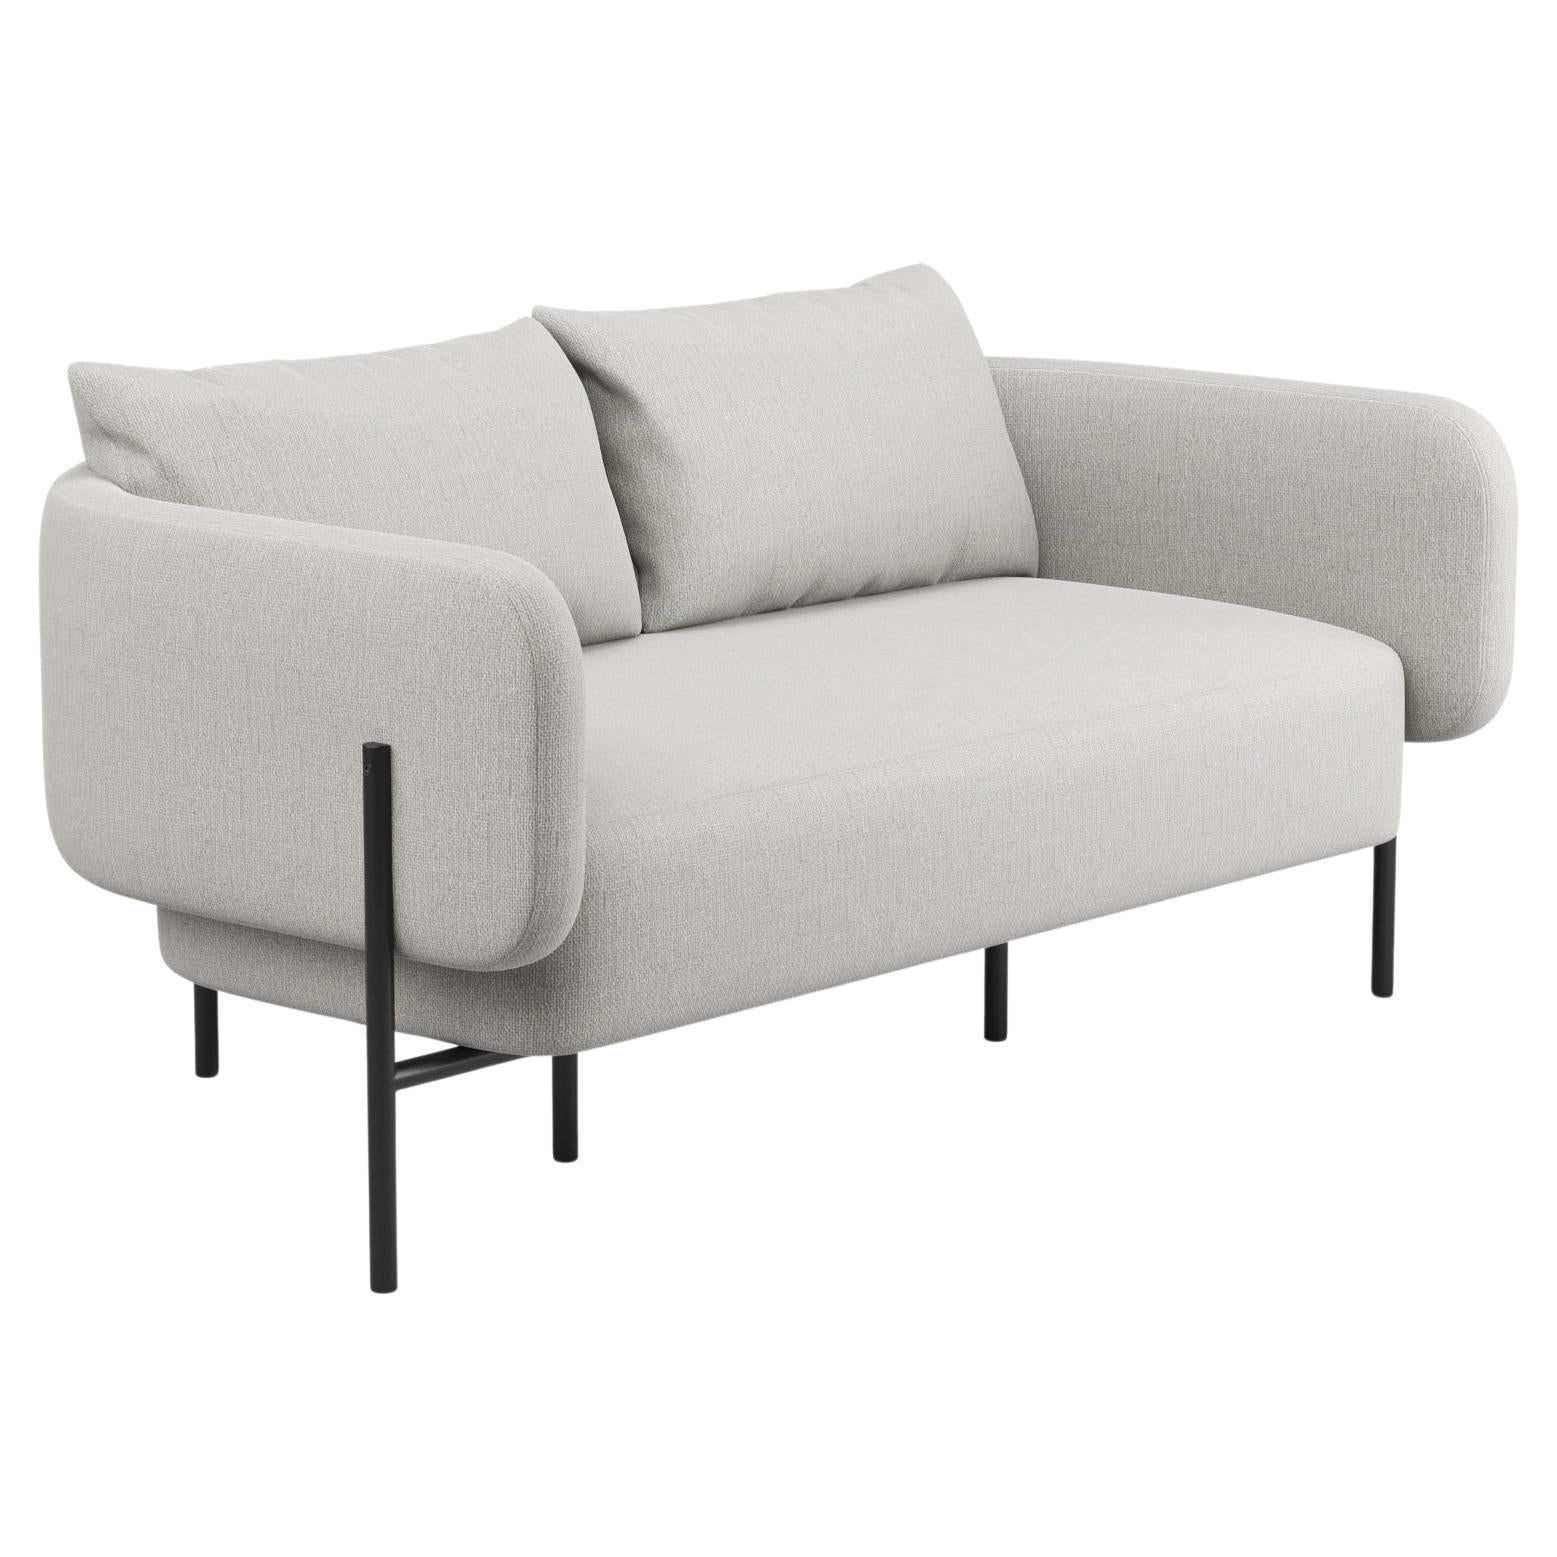 Hayche Abrazo 2 Seater Sofa - Gravel, UK, Made to Order